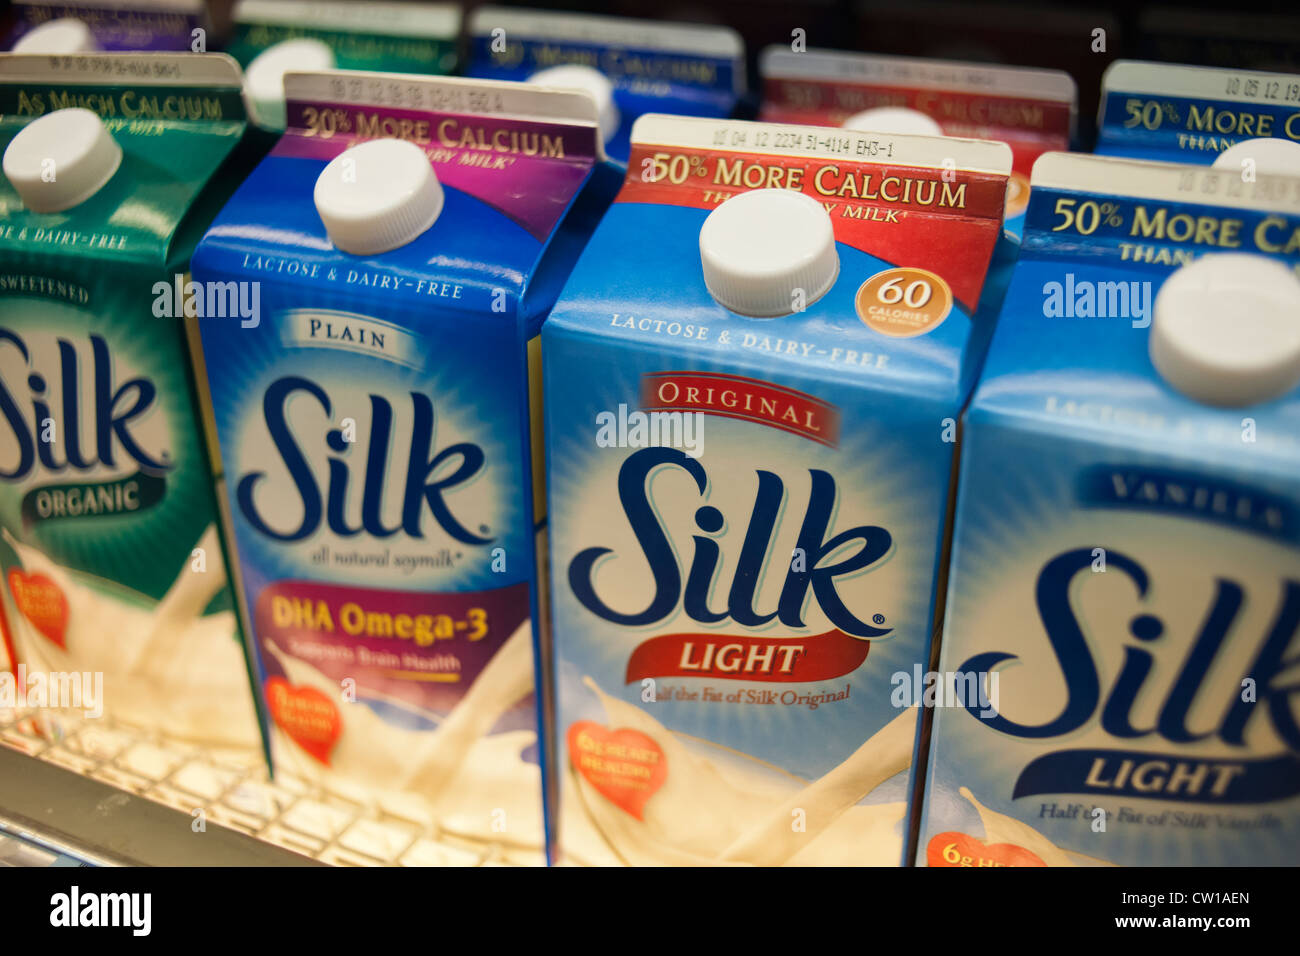 silk-brand-soy-milk-is-seen-in-a-supermarket-refrigerator-case-in-CW1AEN.jpg